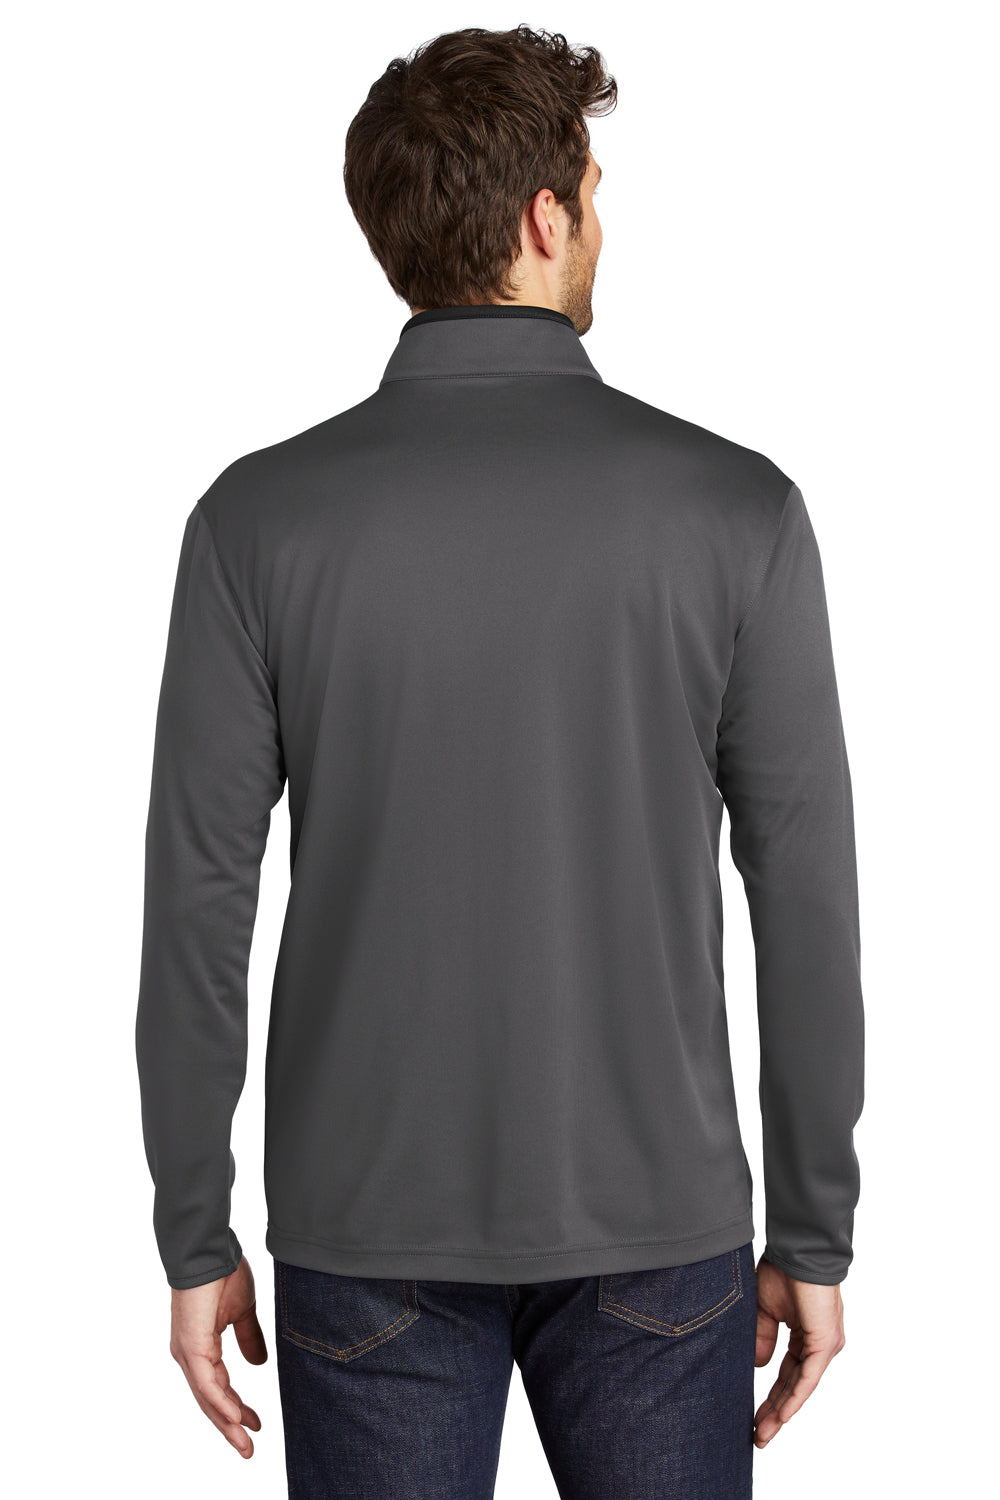 Port Authority Mens Performance Silk Touch 1/4 Zip Sweatshirt Steel Grey/Black Side